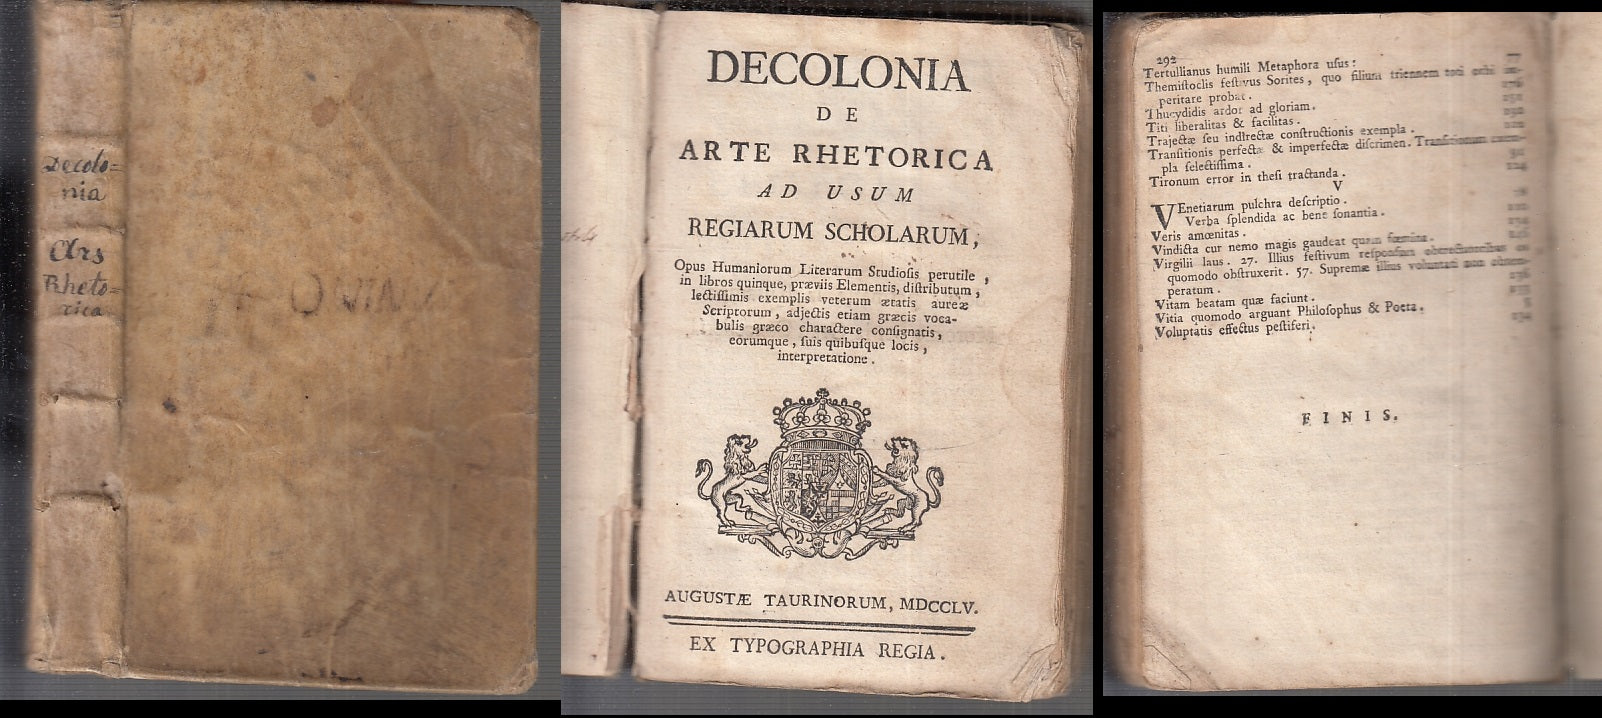 LH- DE ARTE RETORICA SETTECENTINA - DECOLONIA - TYP. REGIA --- 1755 - C - XFS46